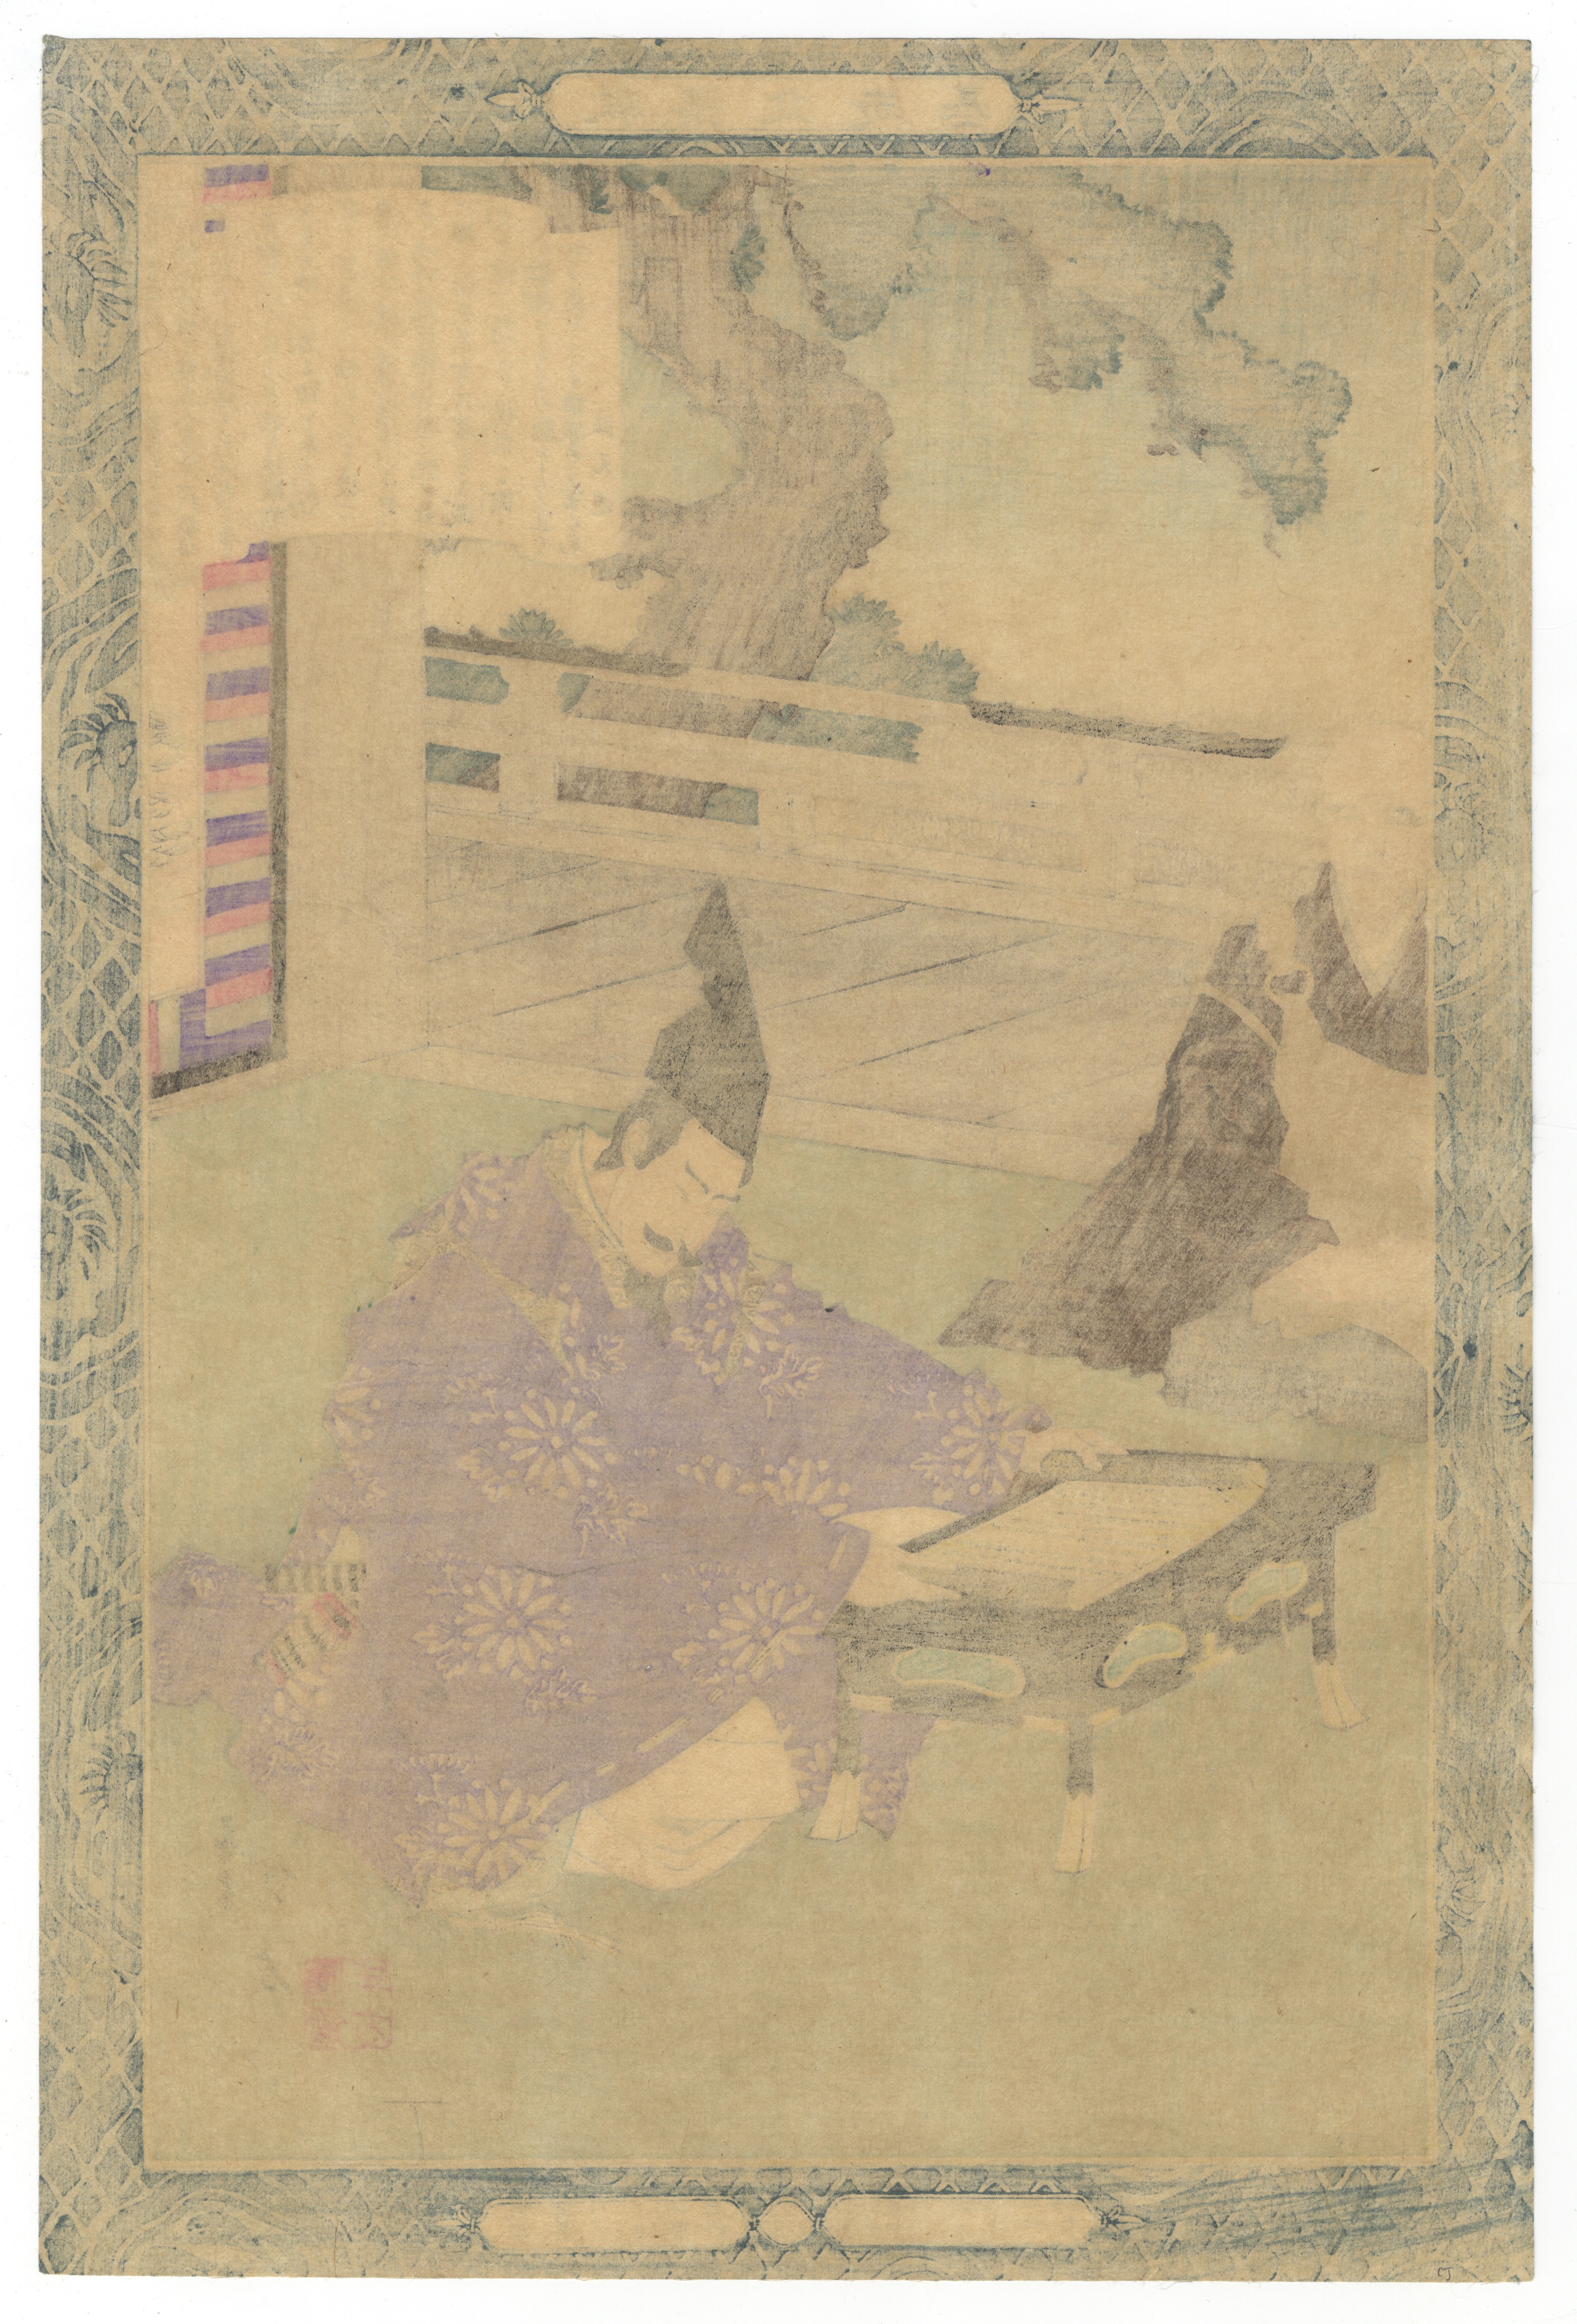 Toshikata, Kiyochika, Original Japanese Woodblock Print - Image 3 of 5